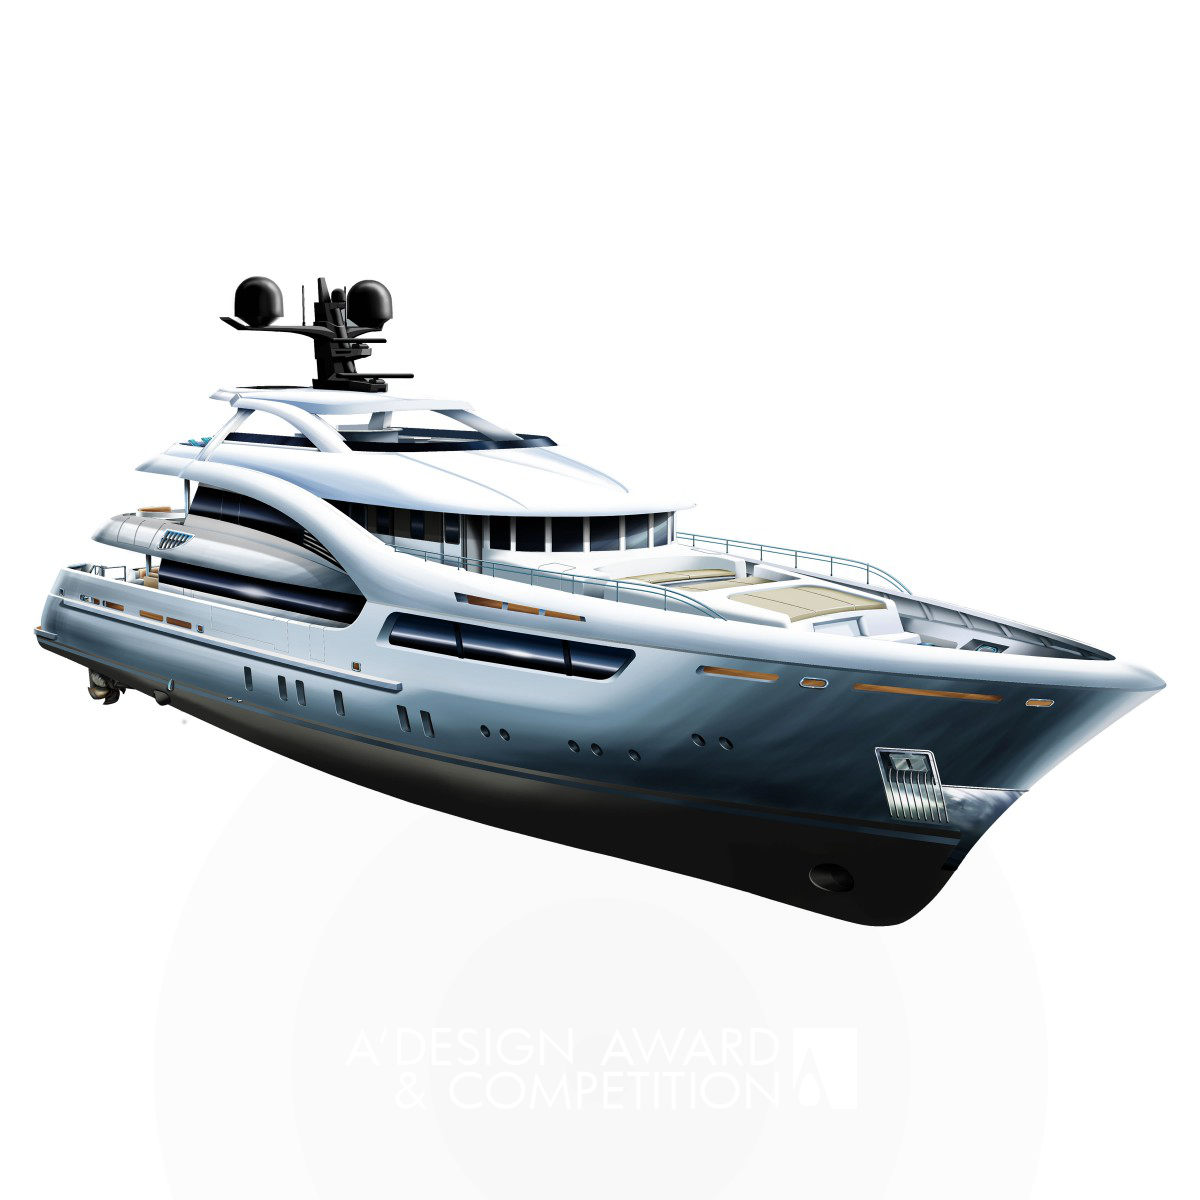 Sarp 46M Yacht by Sarp Yacht Golden Yacht and Marine Vessels Design Award Winner 2015 